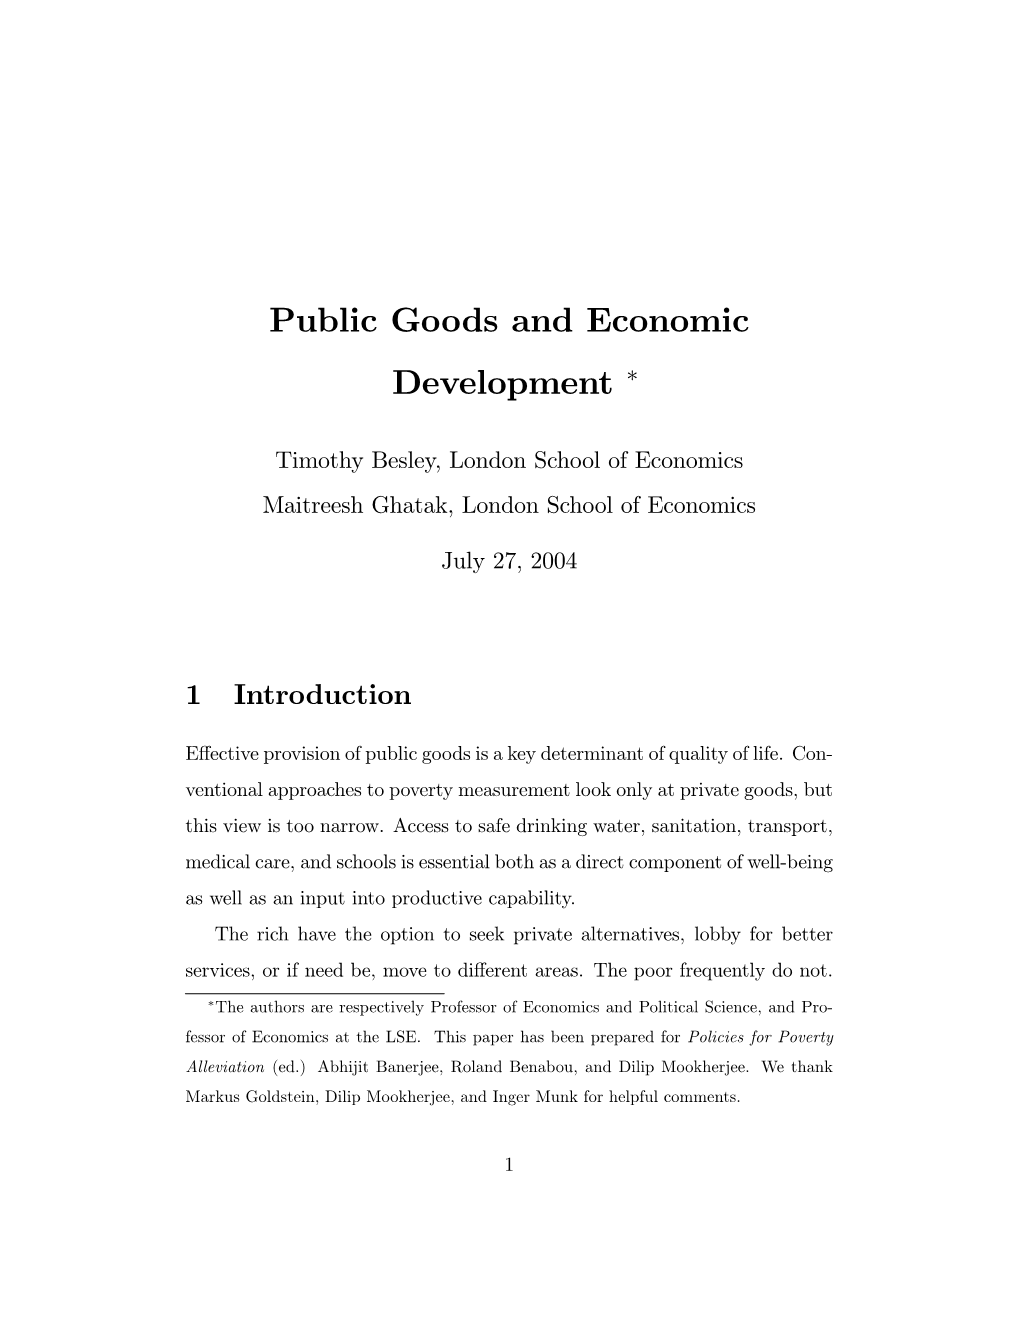 Public Goods and Economic Development